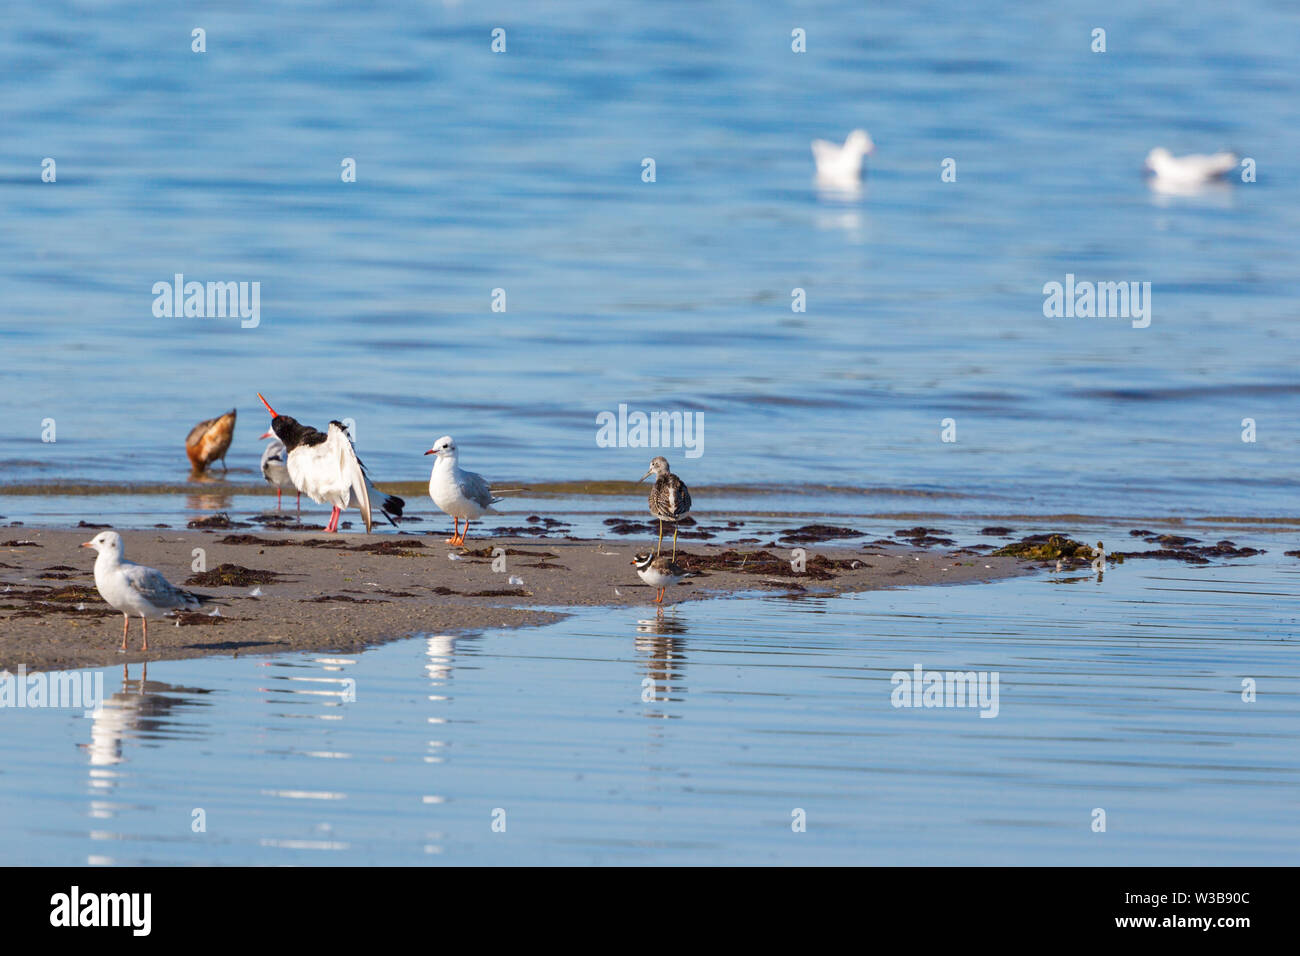 Shorebirds on a sandy beach by the sea Stock Photo